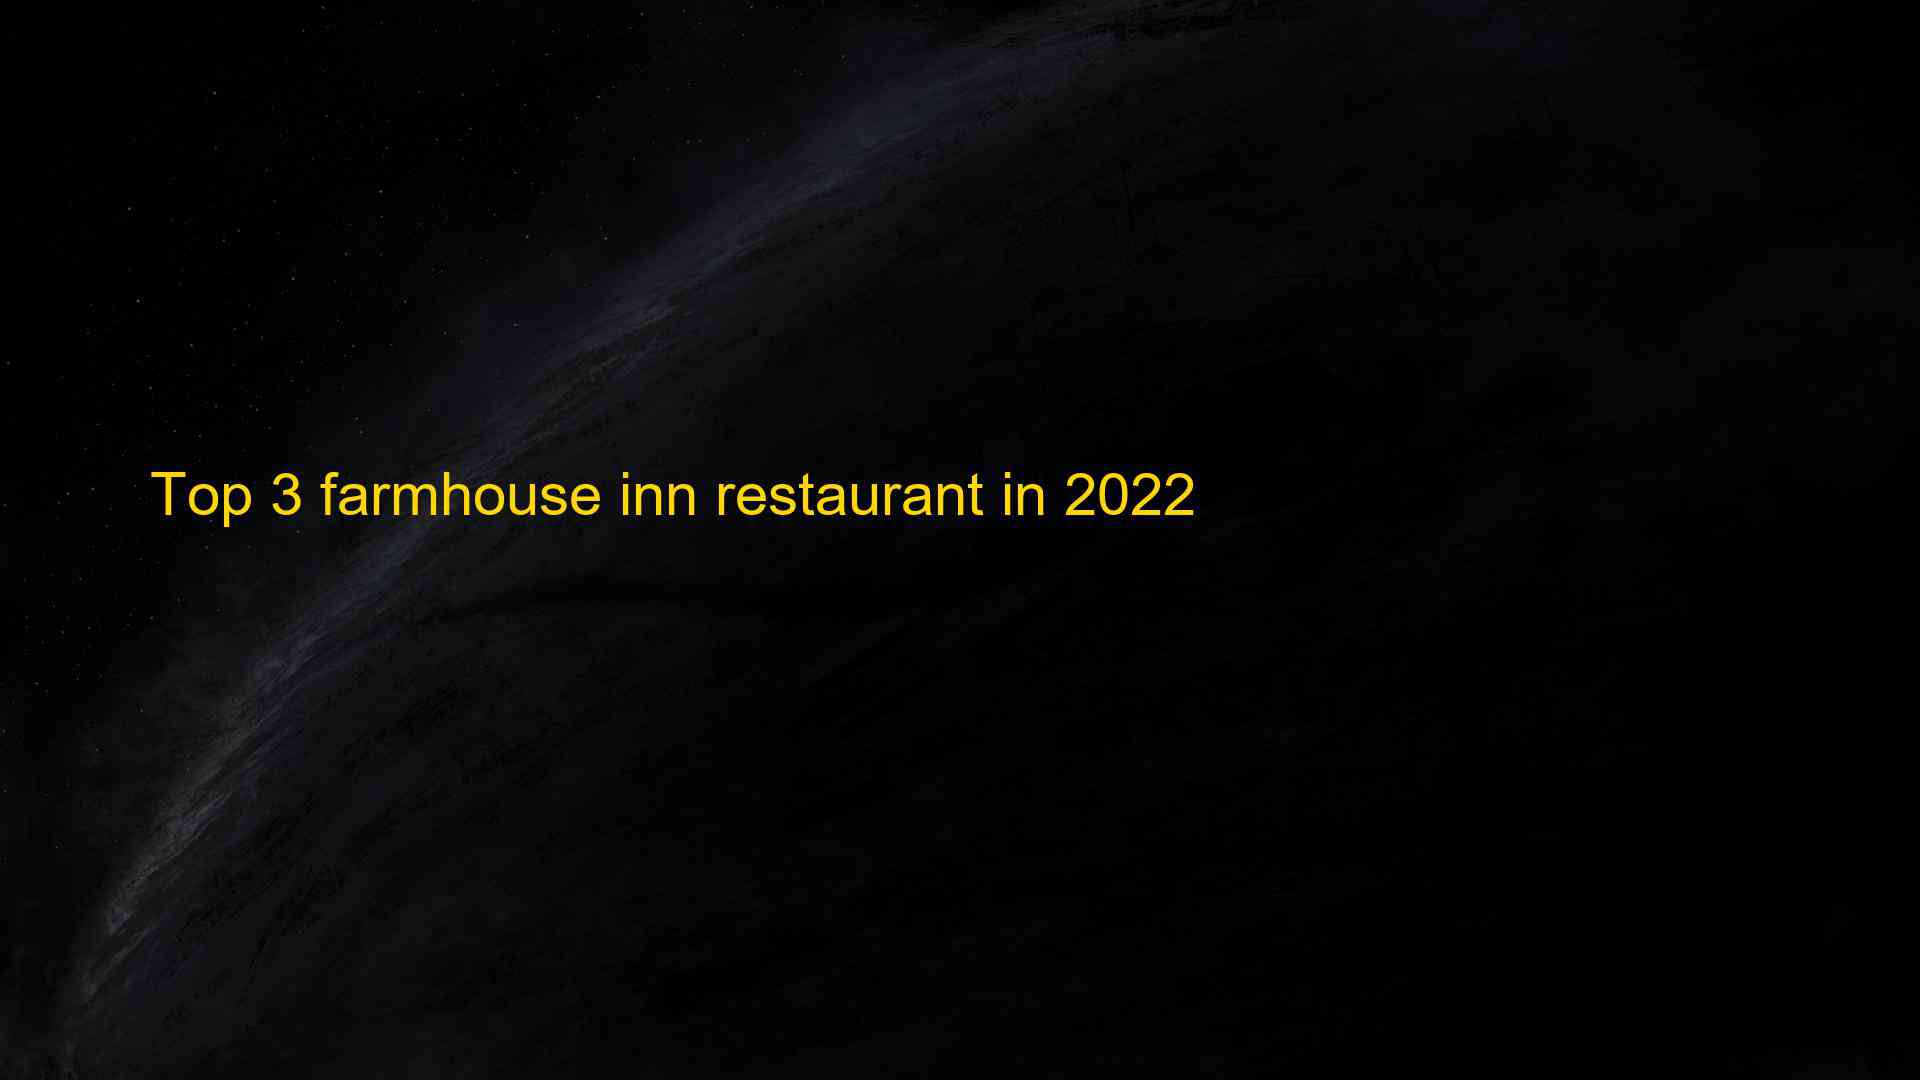 Top 3 farmhouse inn restaurant in 2022 1663401962